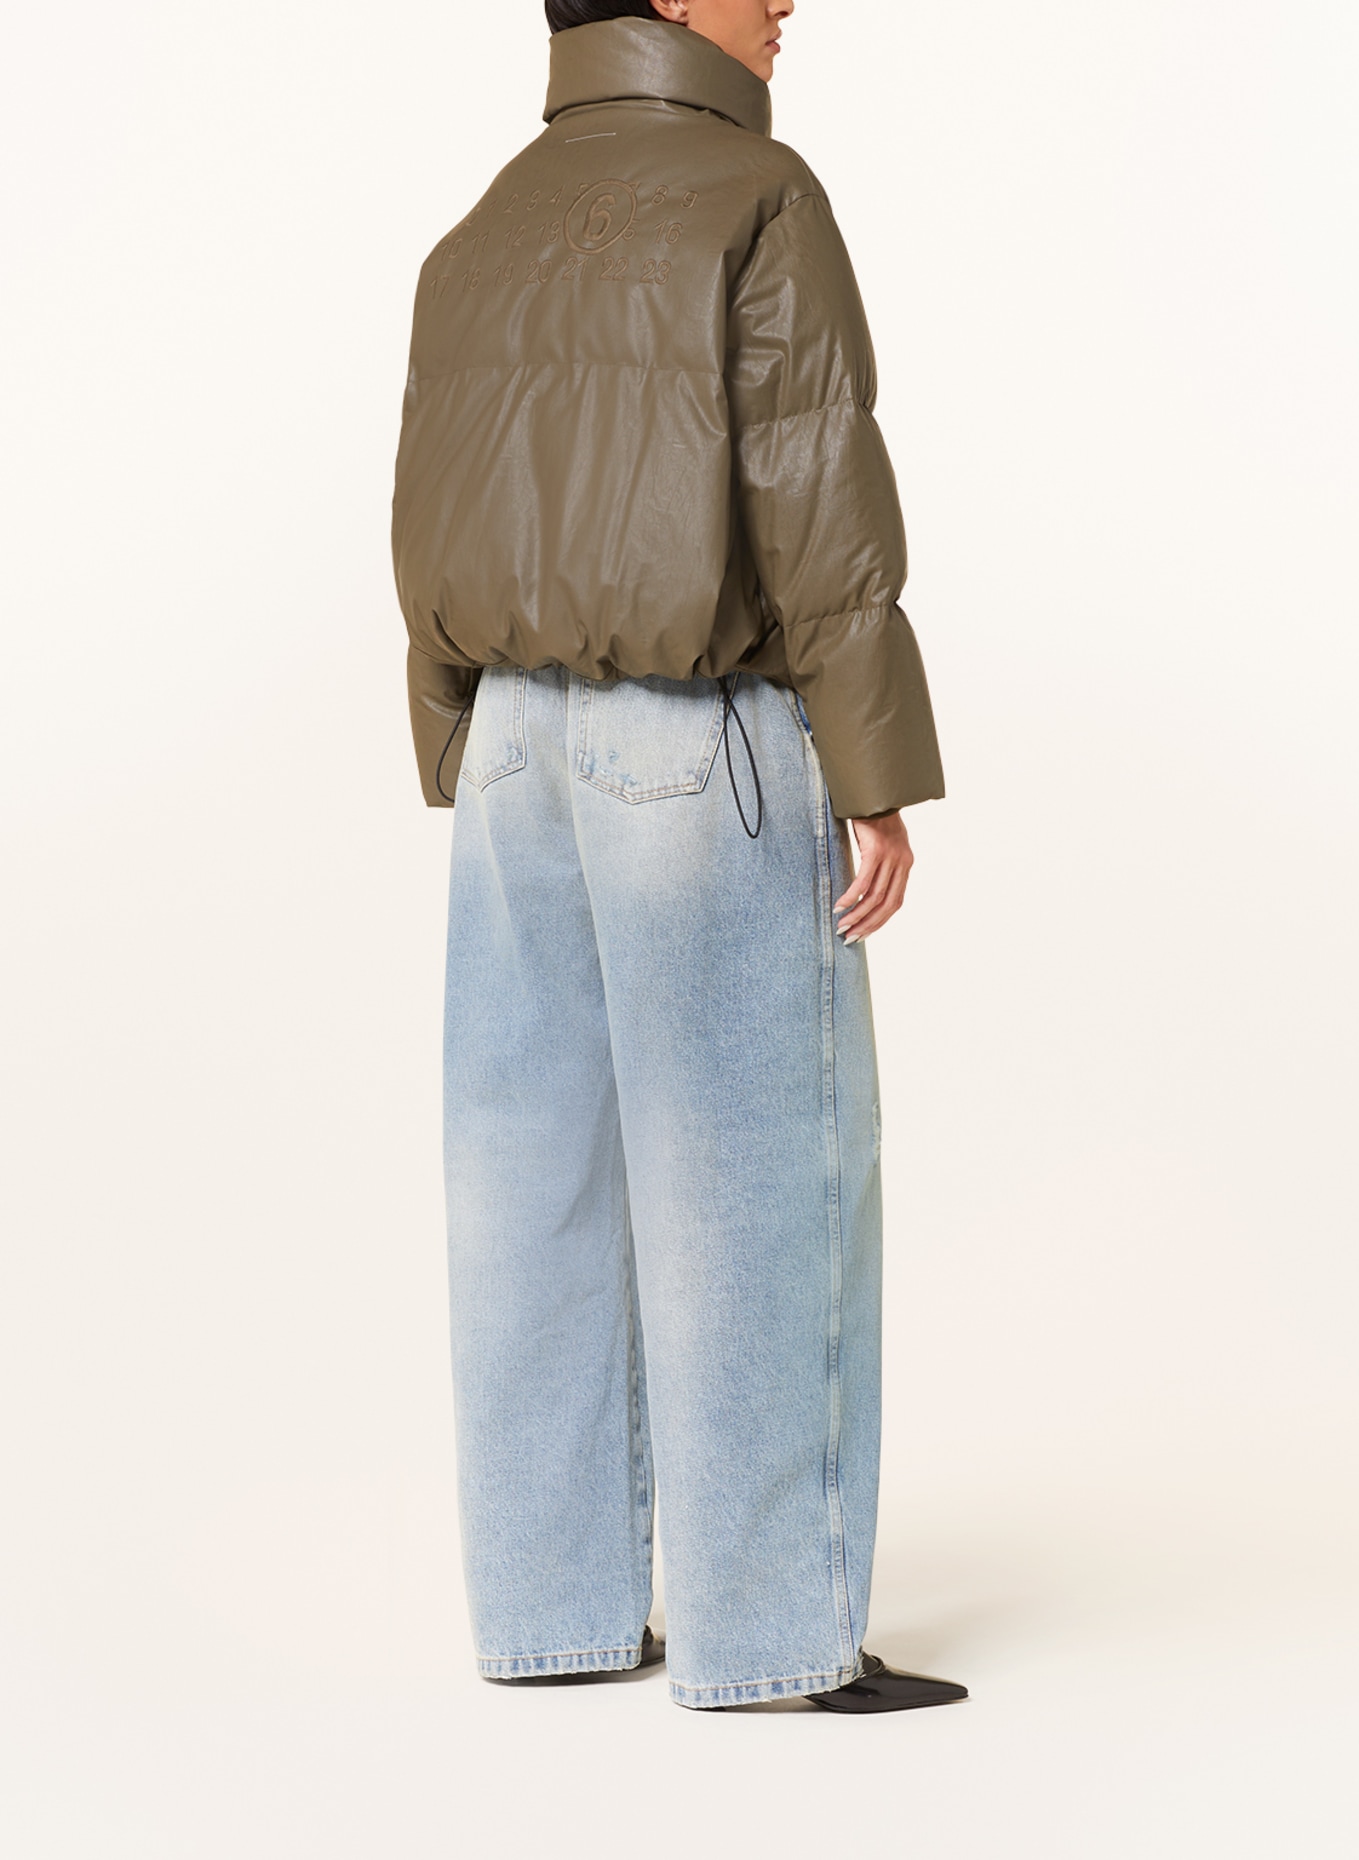 MM6 Maison Margiela Oversized down jacket in leather look, Color: KHAKI (Image 3)